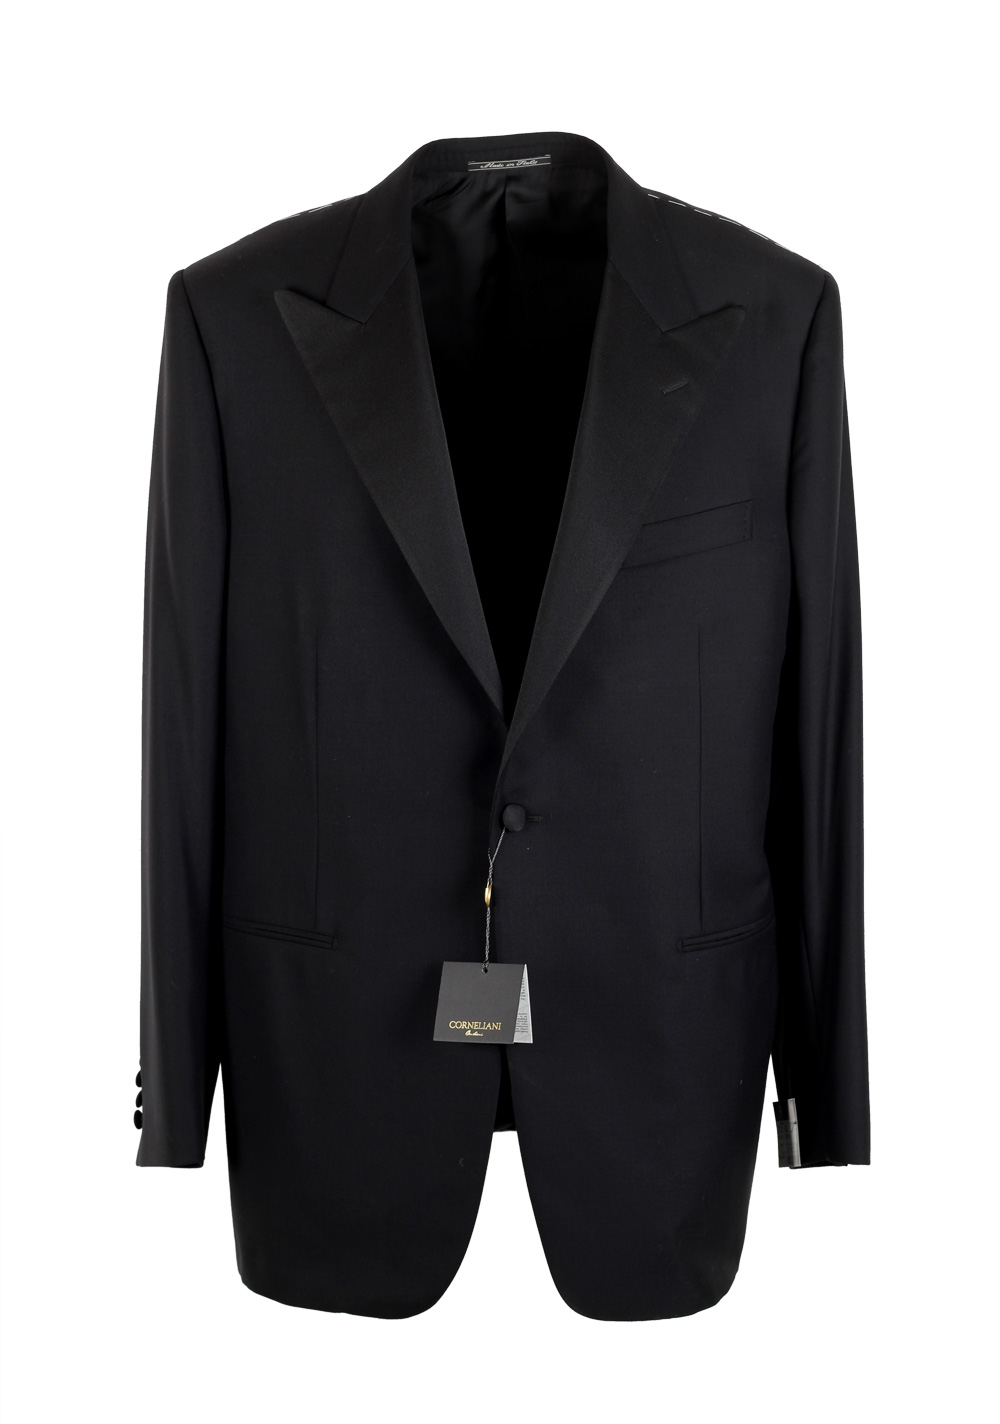 Corneliani Black Tuxedo Sport Coat Size 56L / 46L U.S. Super 140s ...